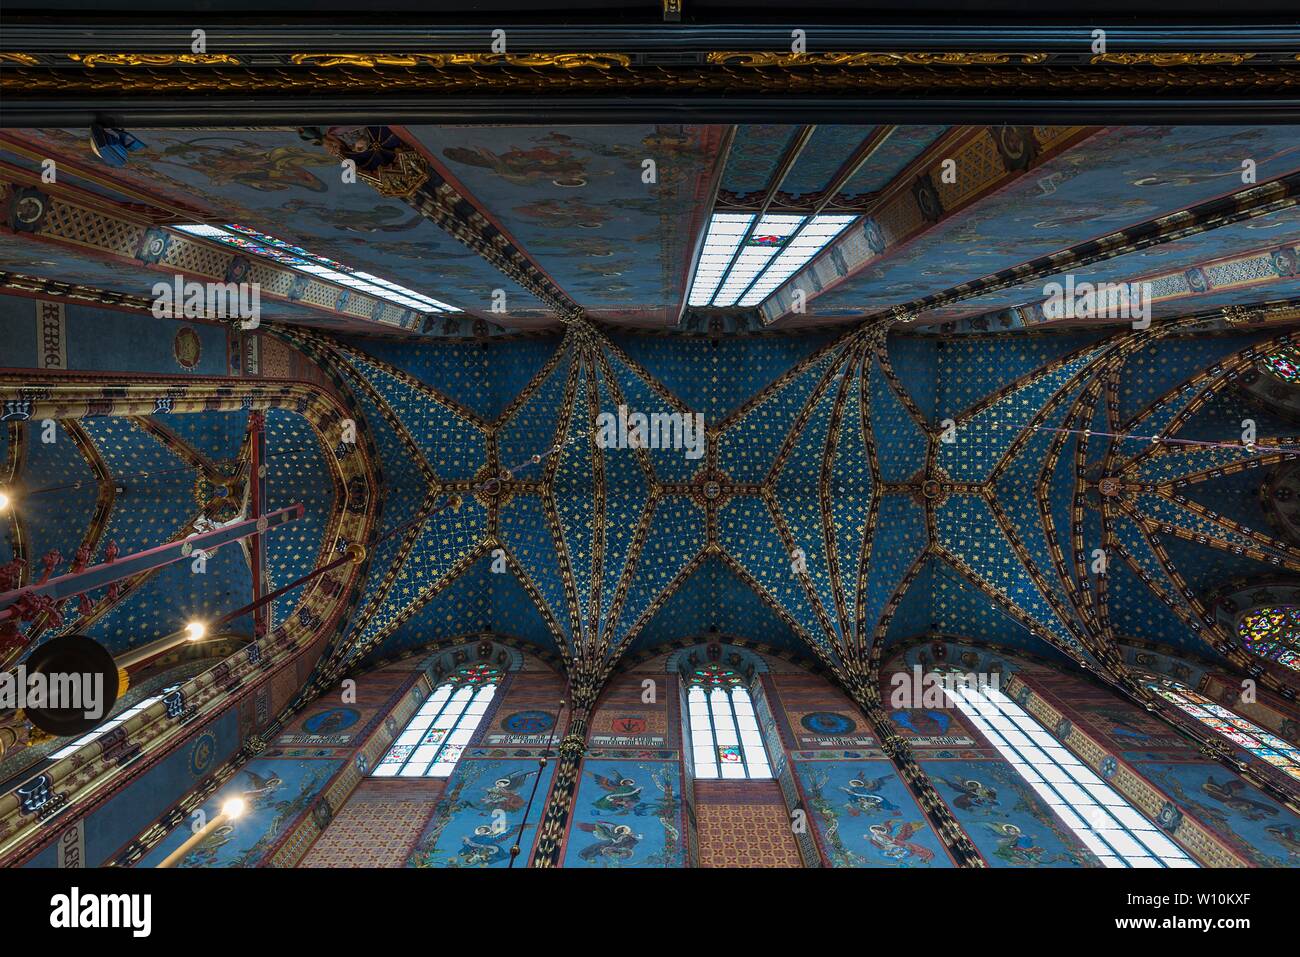 Vaulted ceiling, star vault of the gothic St. Mary's Basilica, 14th century, Krakow, Poland Stock Photo